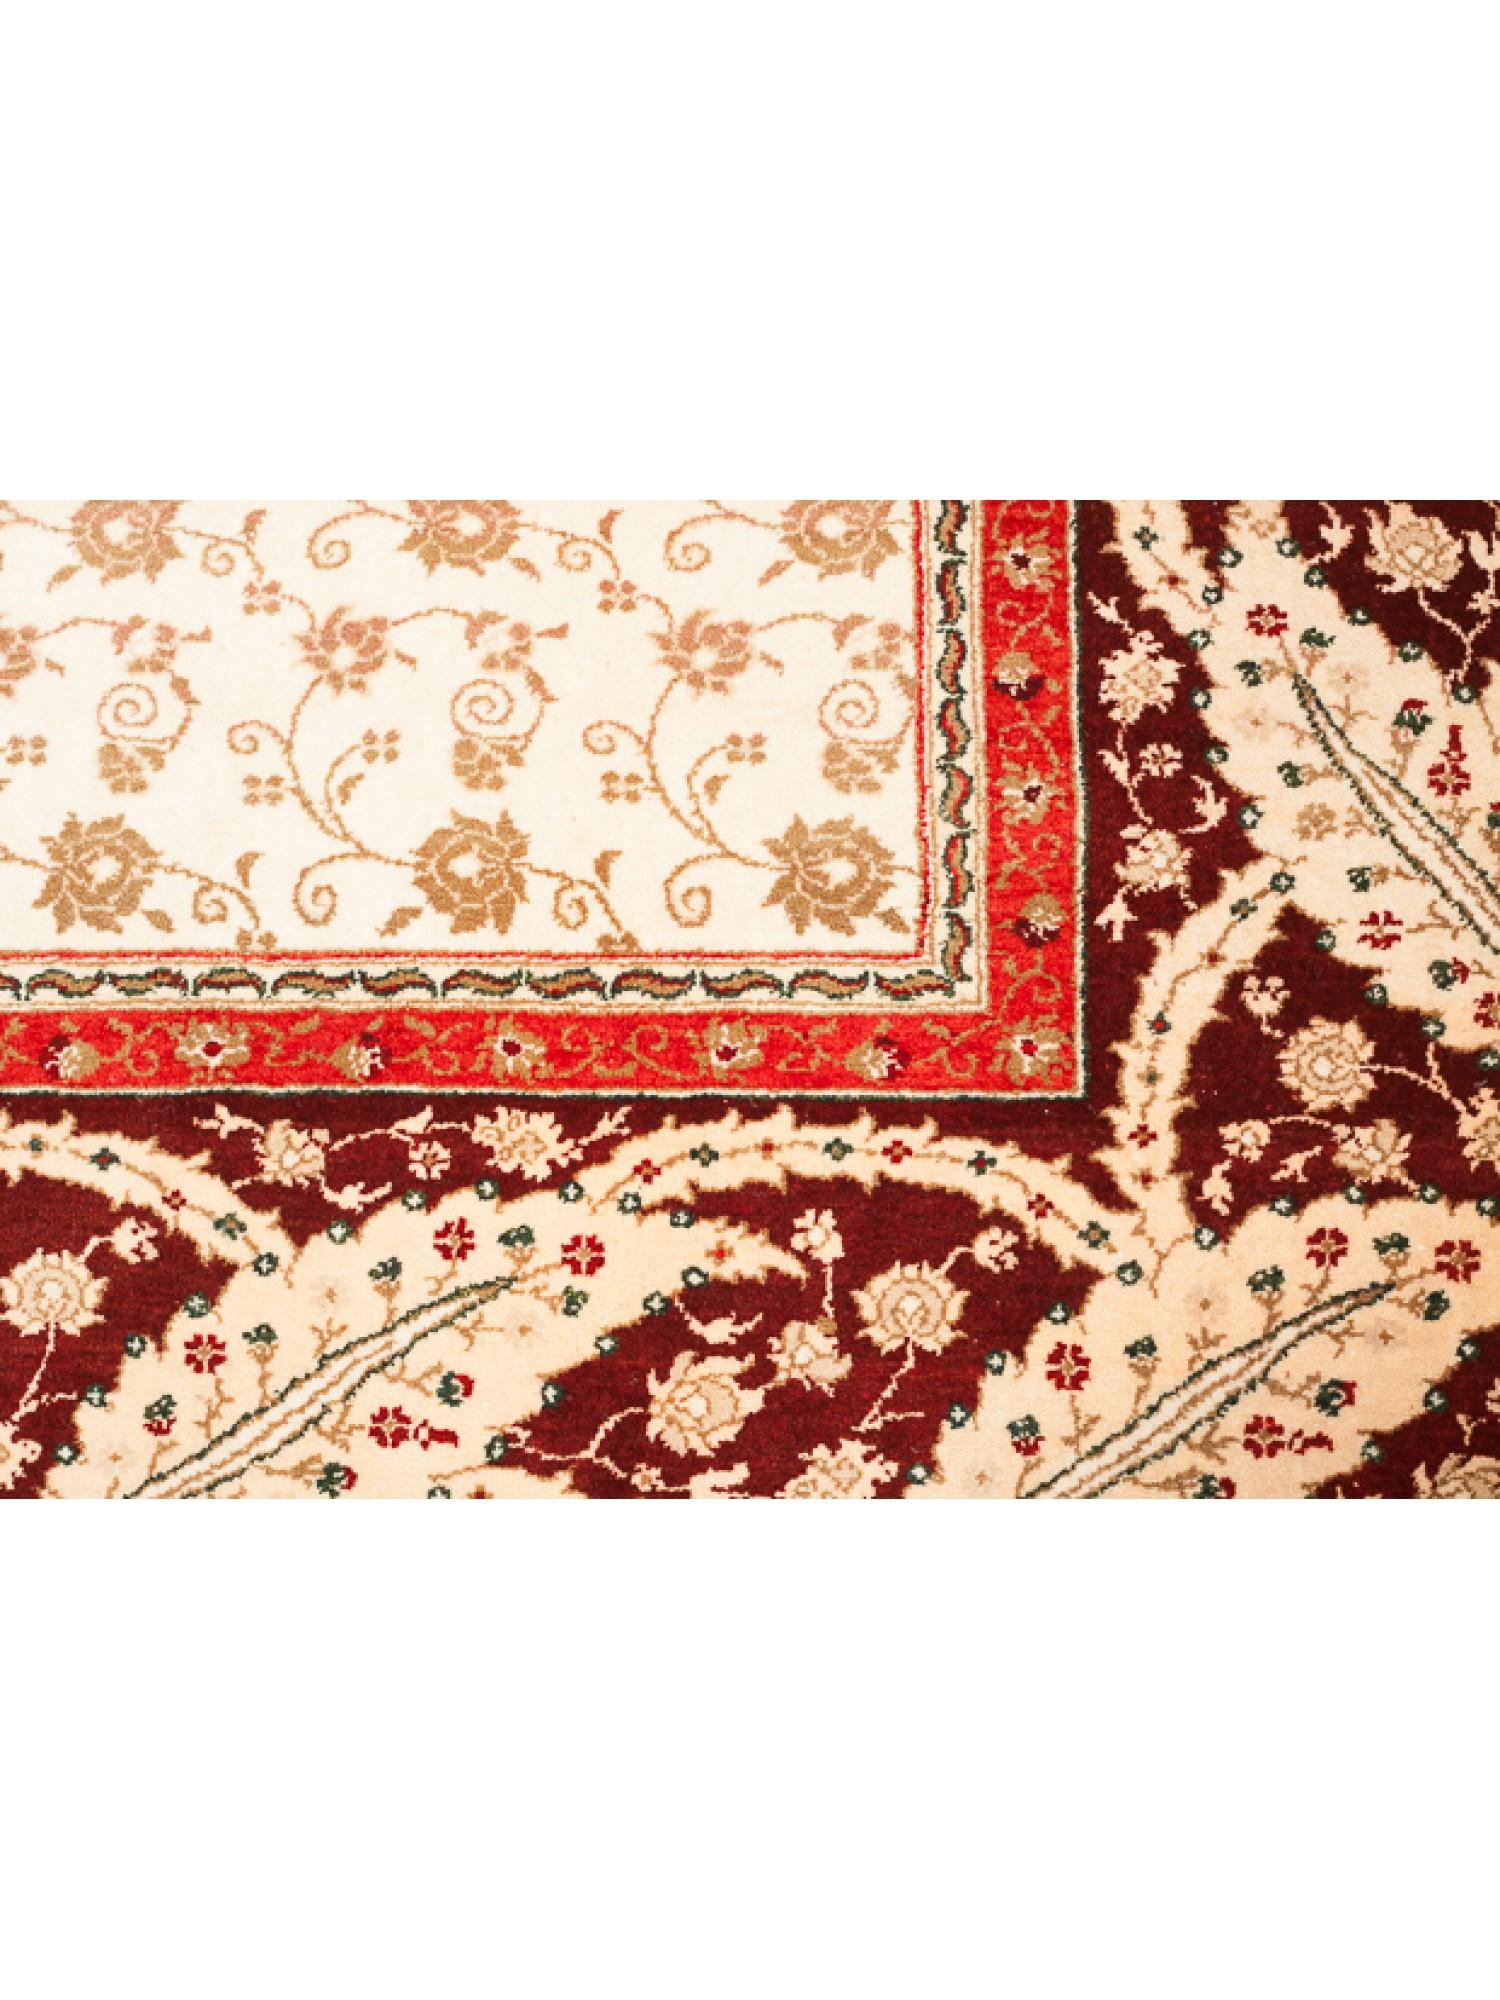 Oushak Hereke Wool & Cotton Carpet, Turkish Anatolian Rug, Beige & Khaki Green Colors For Sale